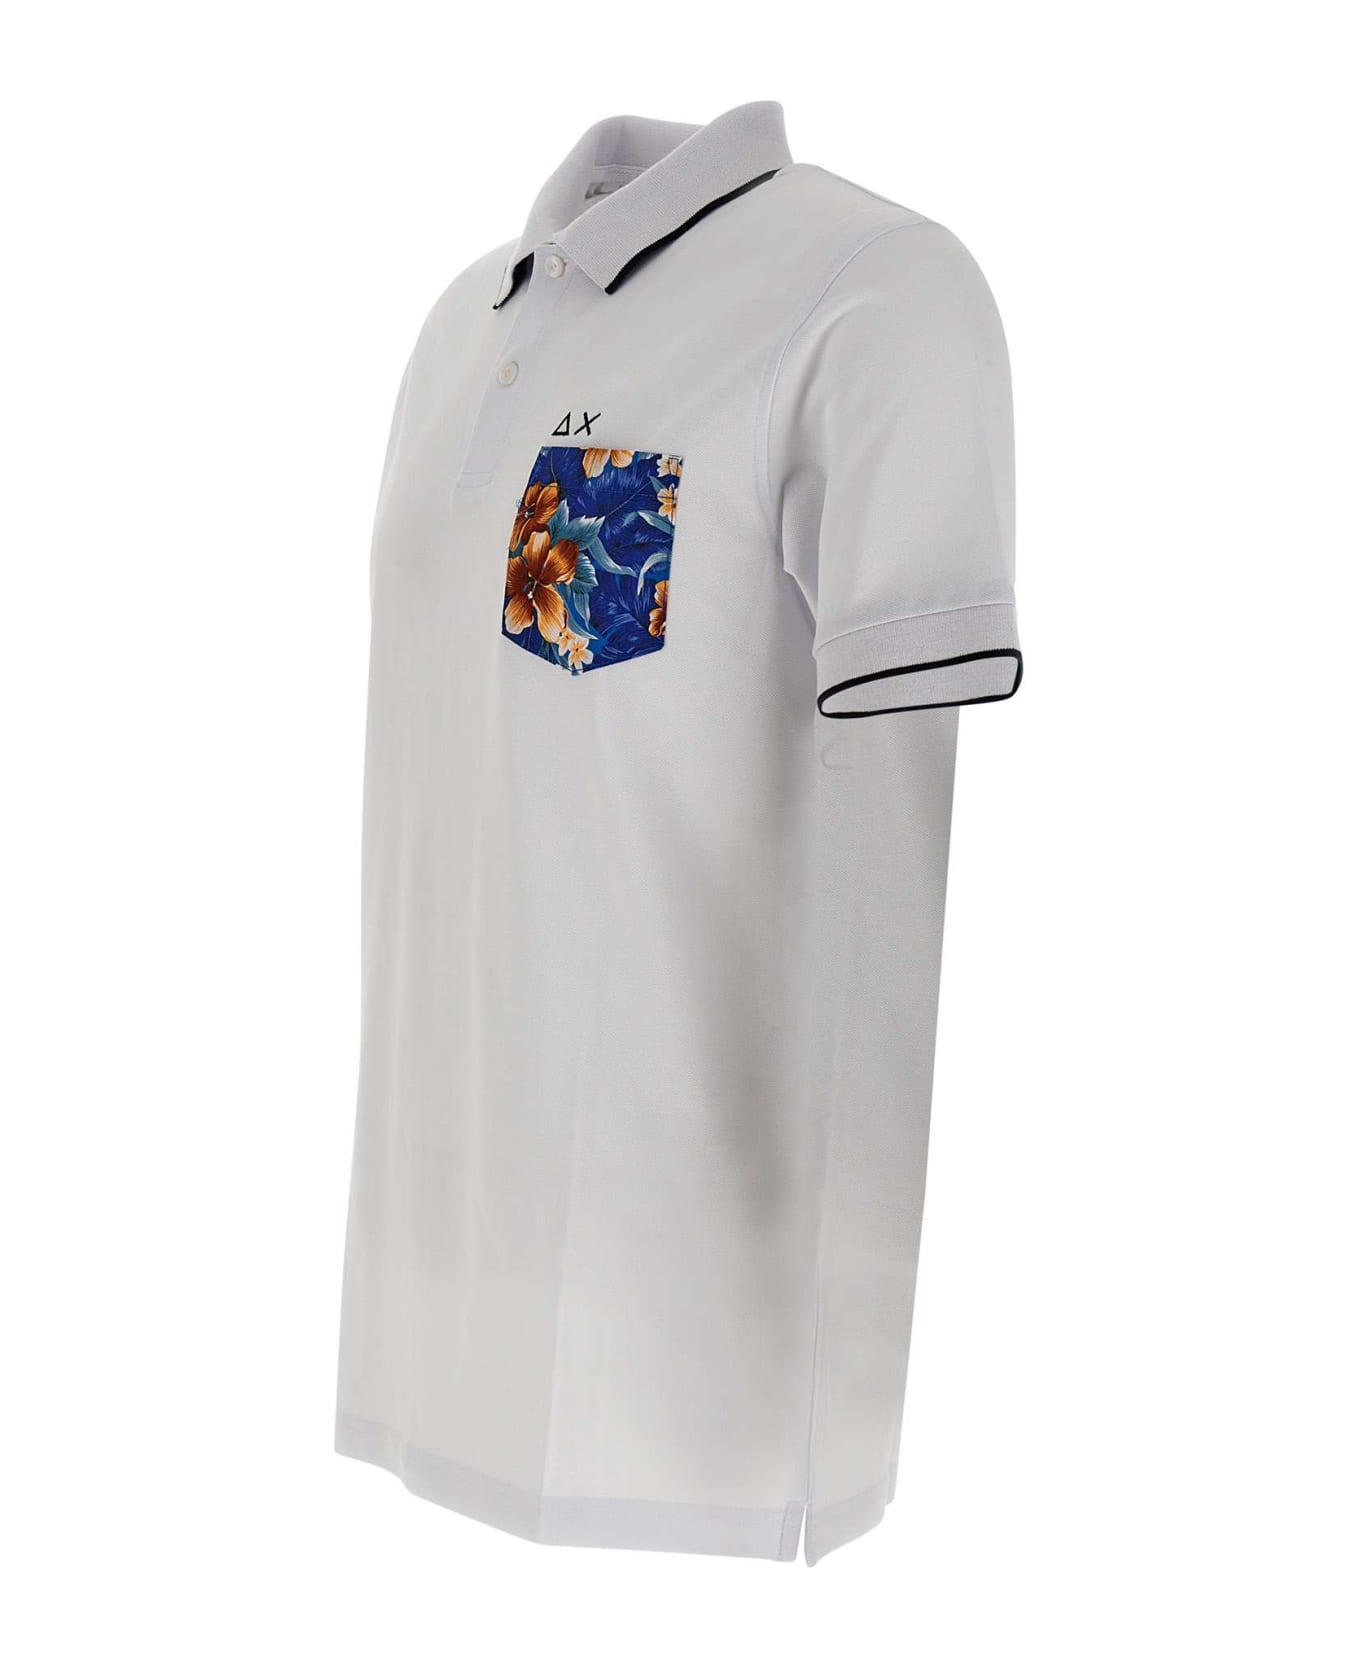 Sun 68 "print Pocket" Polo Shirt Cotton - WHITE